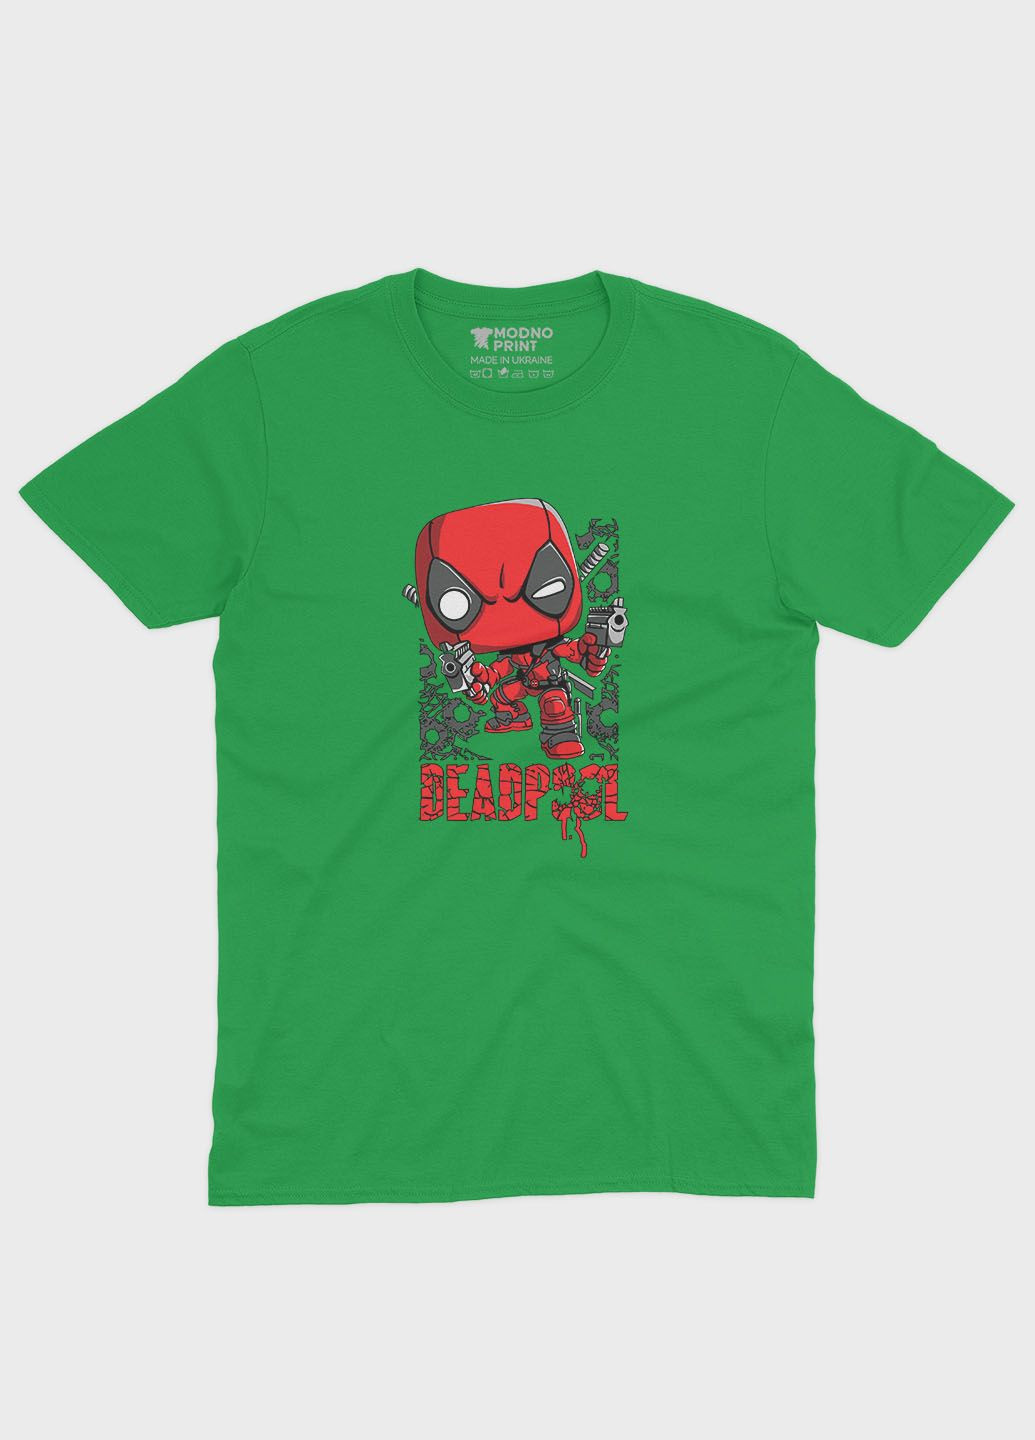 Зеленая демисезонная футболка для мальчика с принтом антигероя - дедпул (ts001-1-keg-006-015-029-b) Modno